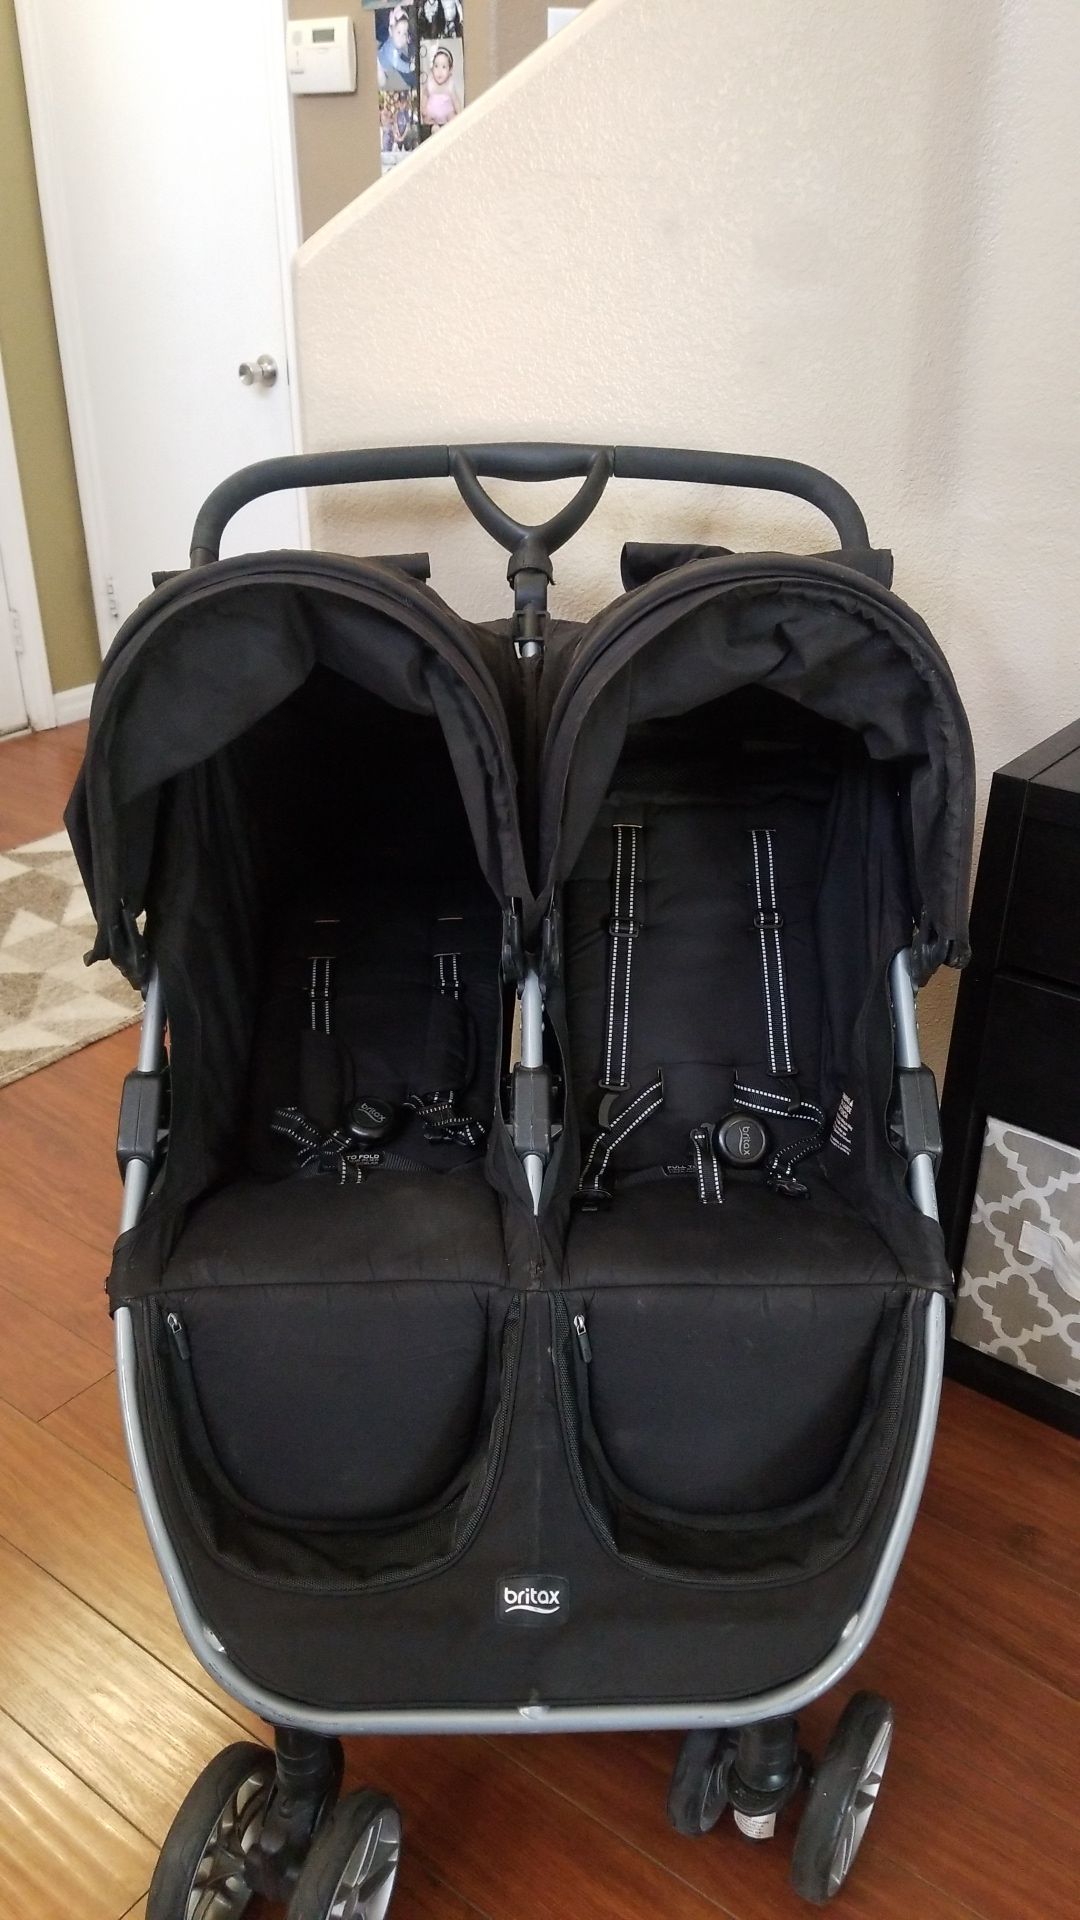 Britax double stroller black